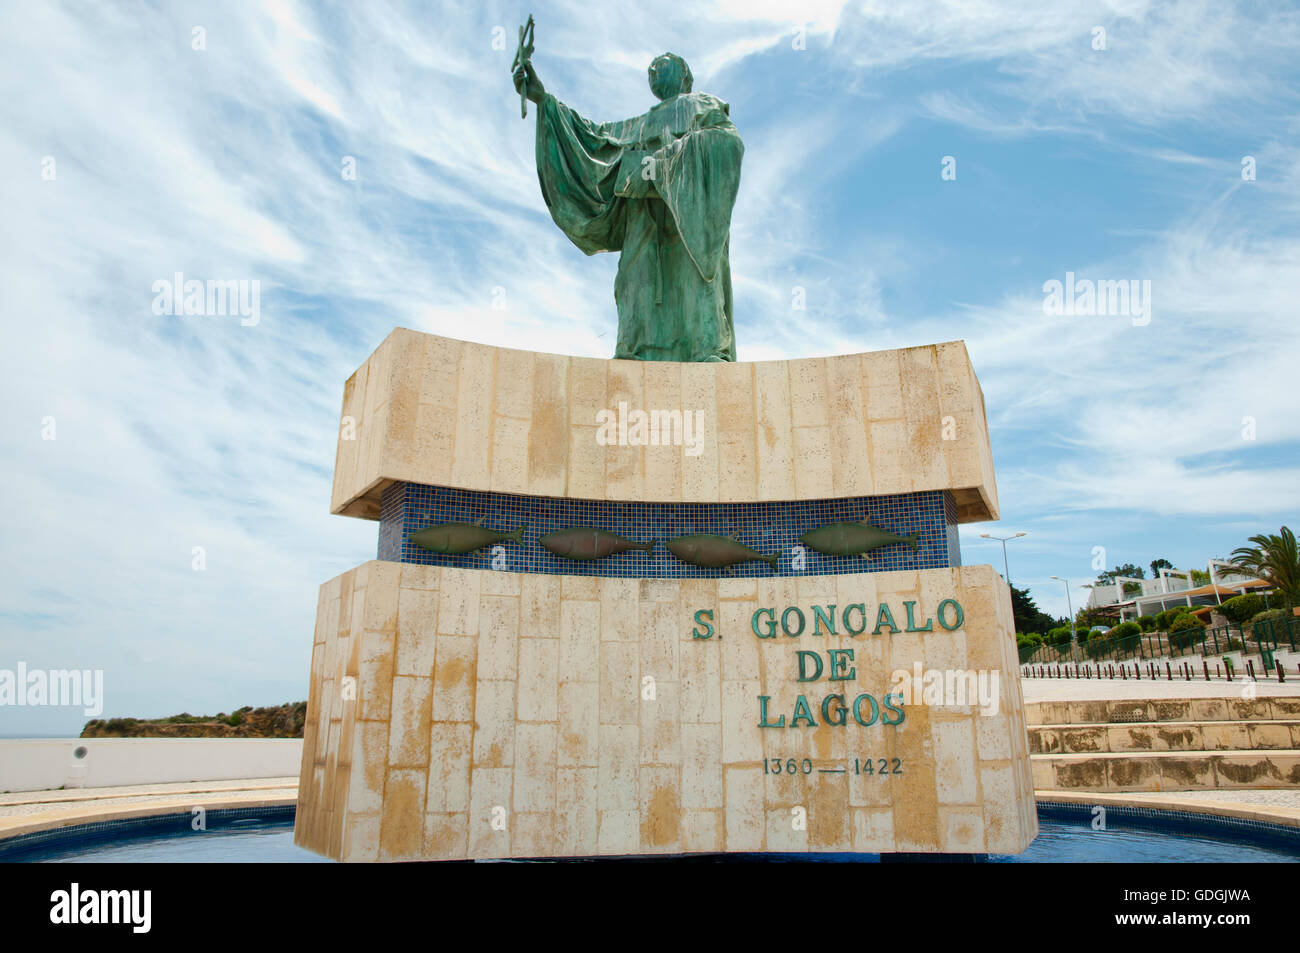 Statue of Sao Goncalo - Lagos - Portugal Stock Photo